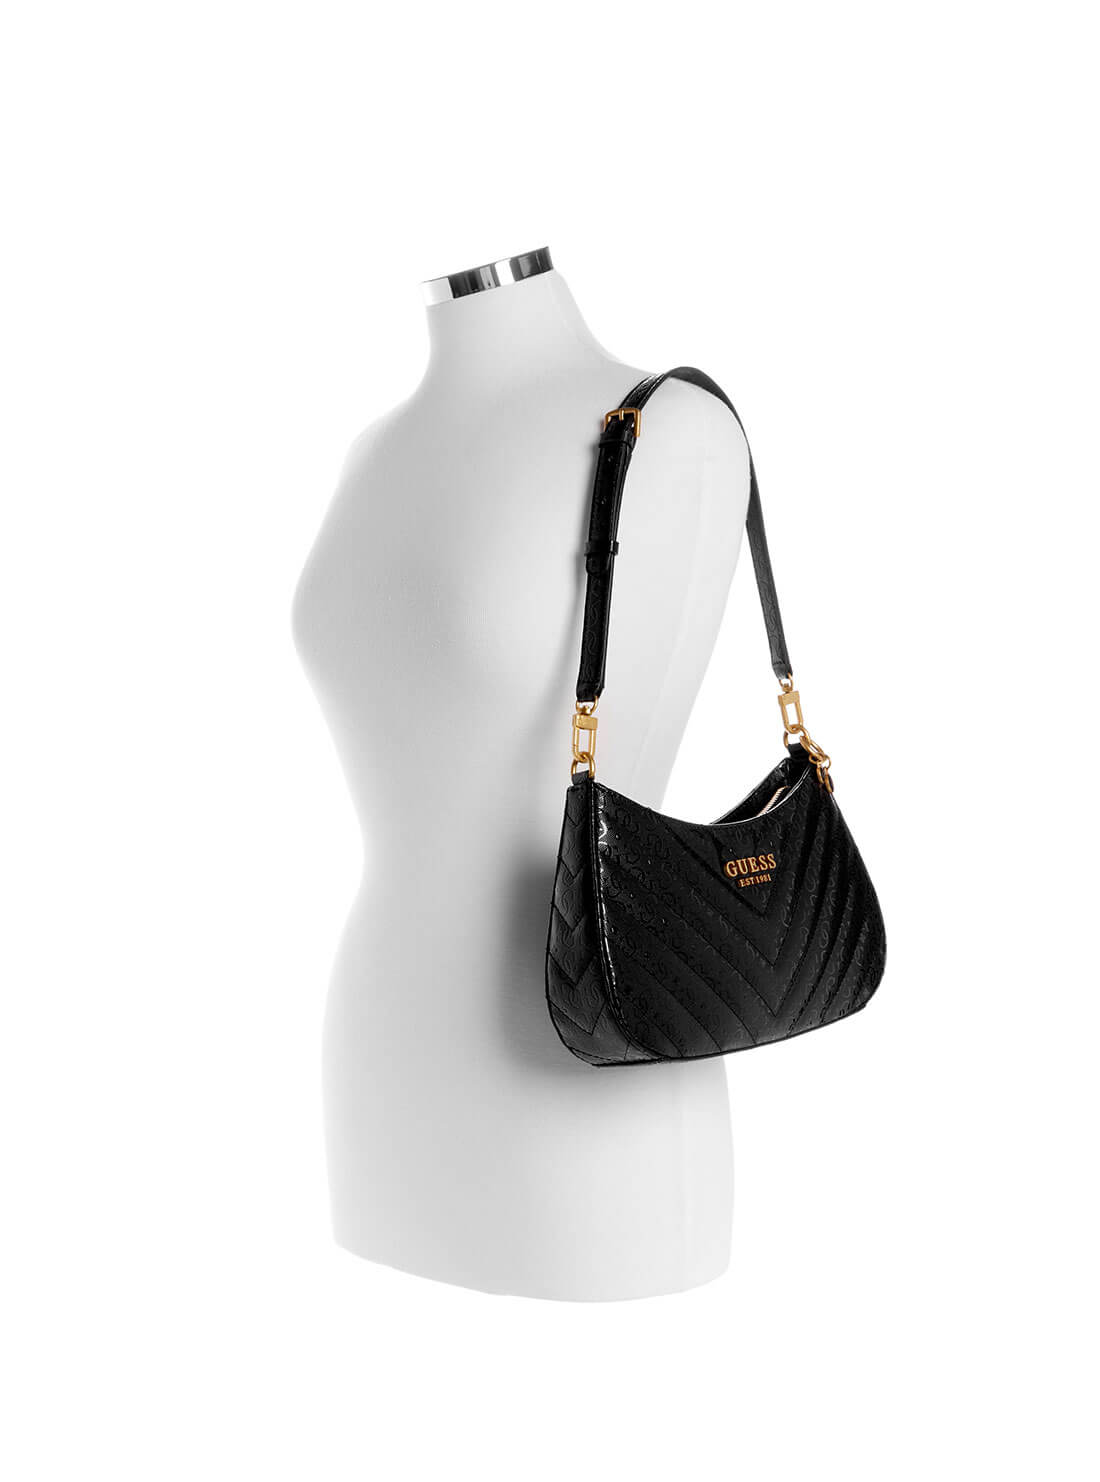 Women's Black Jania Shoulder Bag model view